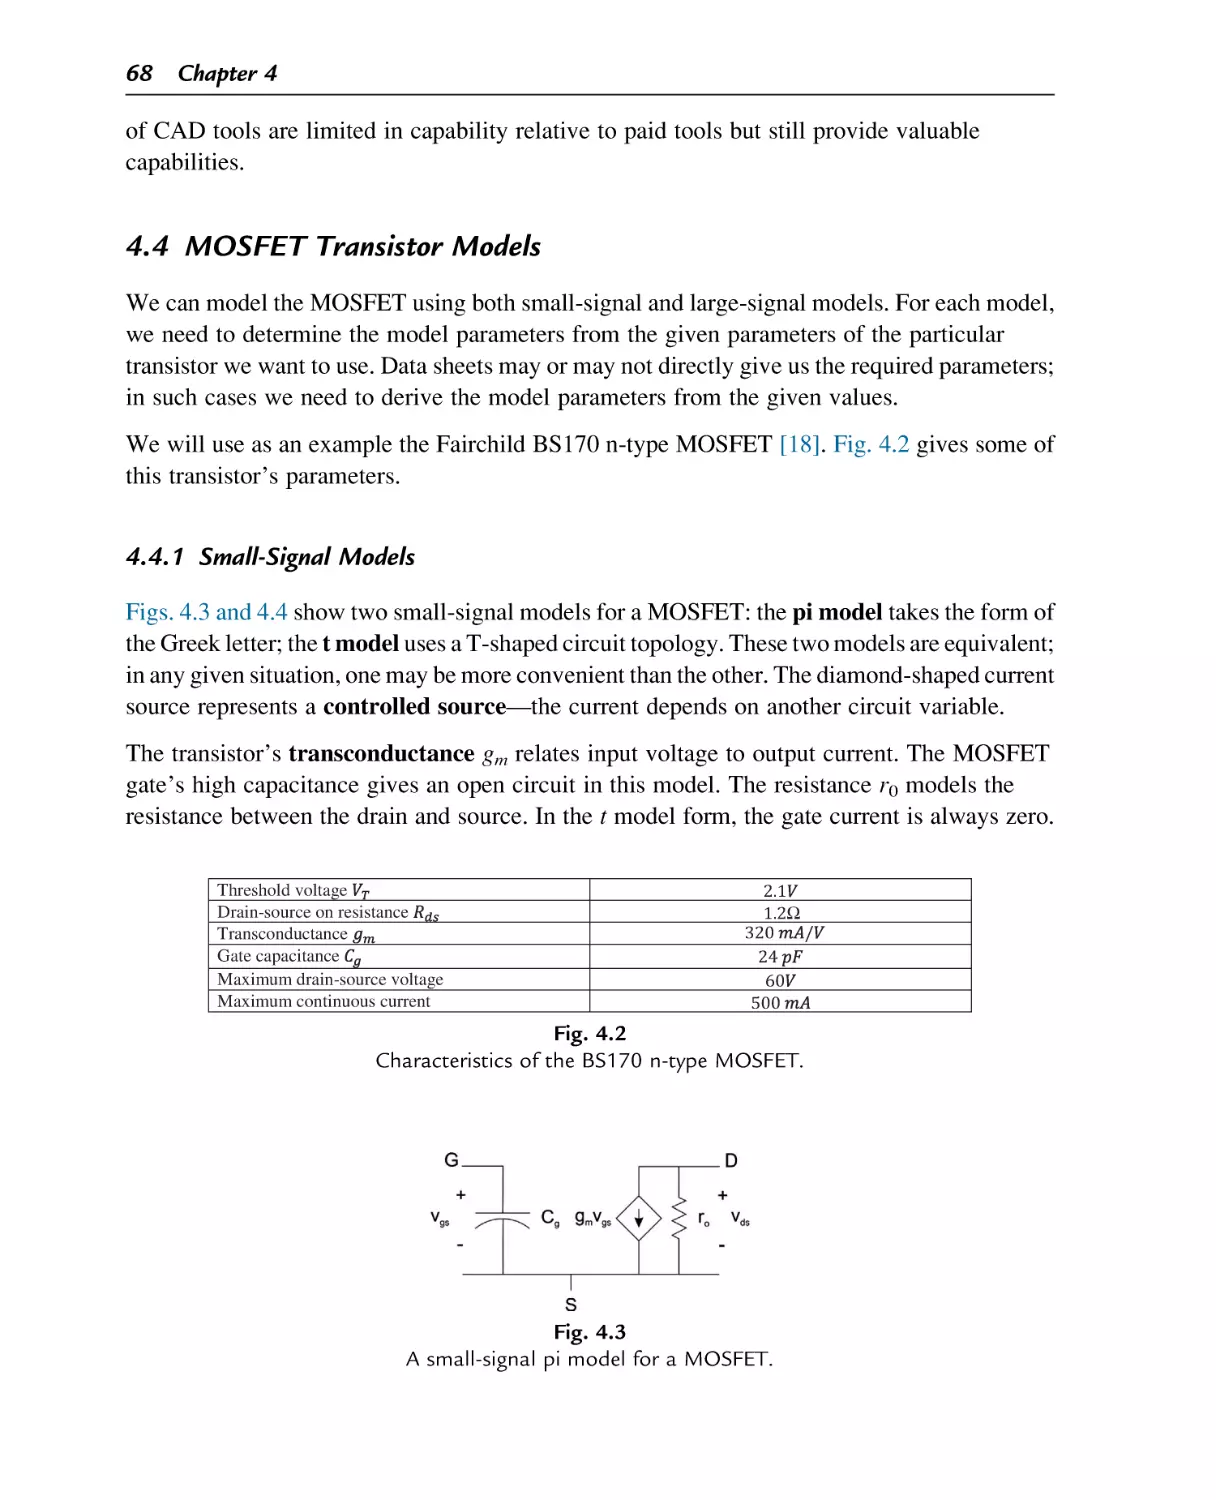 MOSFET Transistor Models
Small-Signal Models